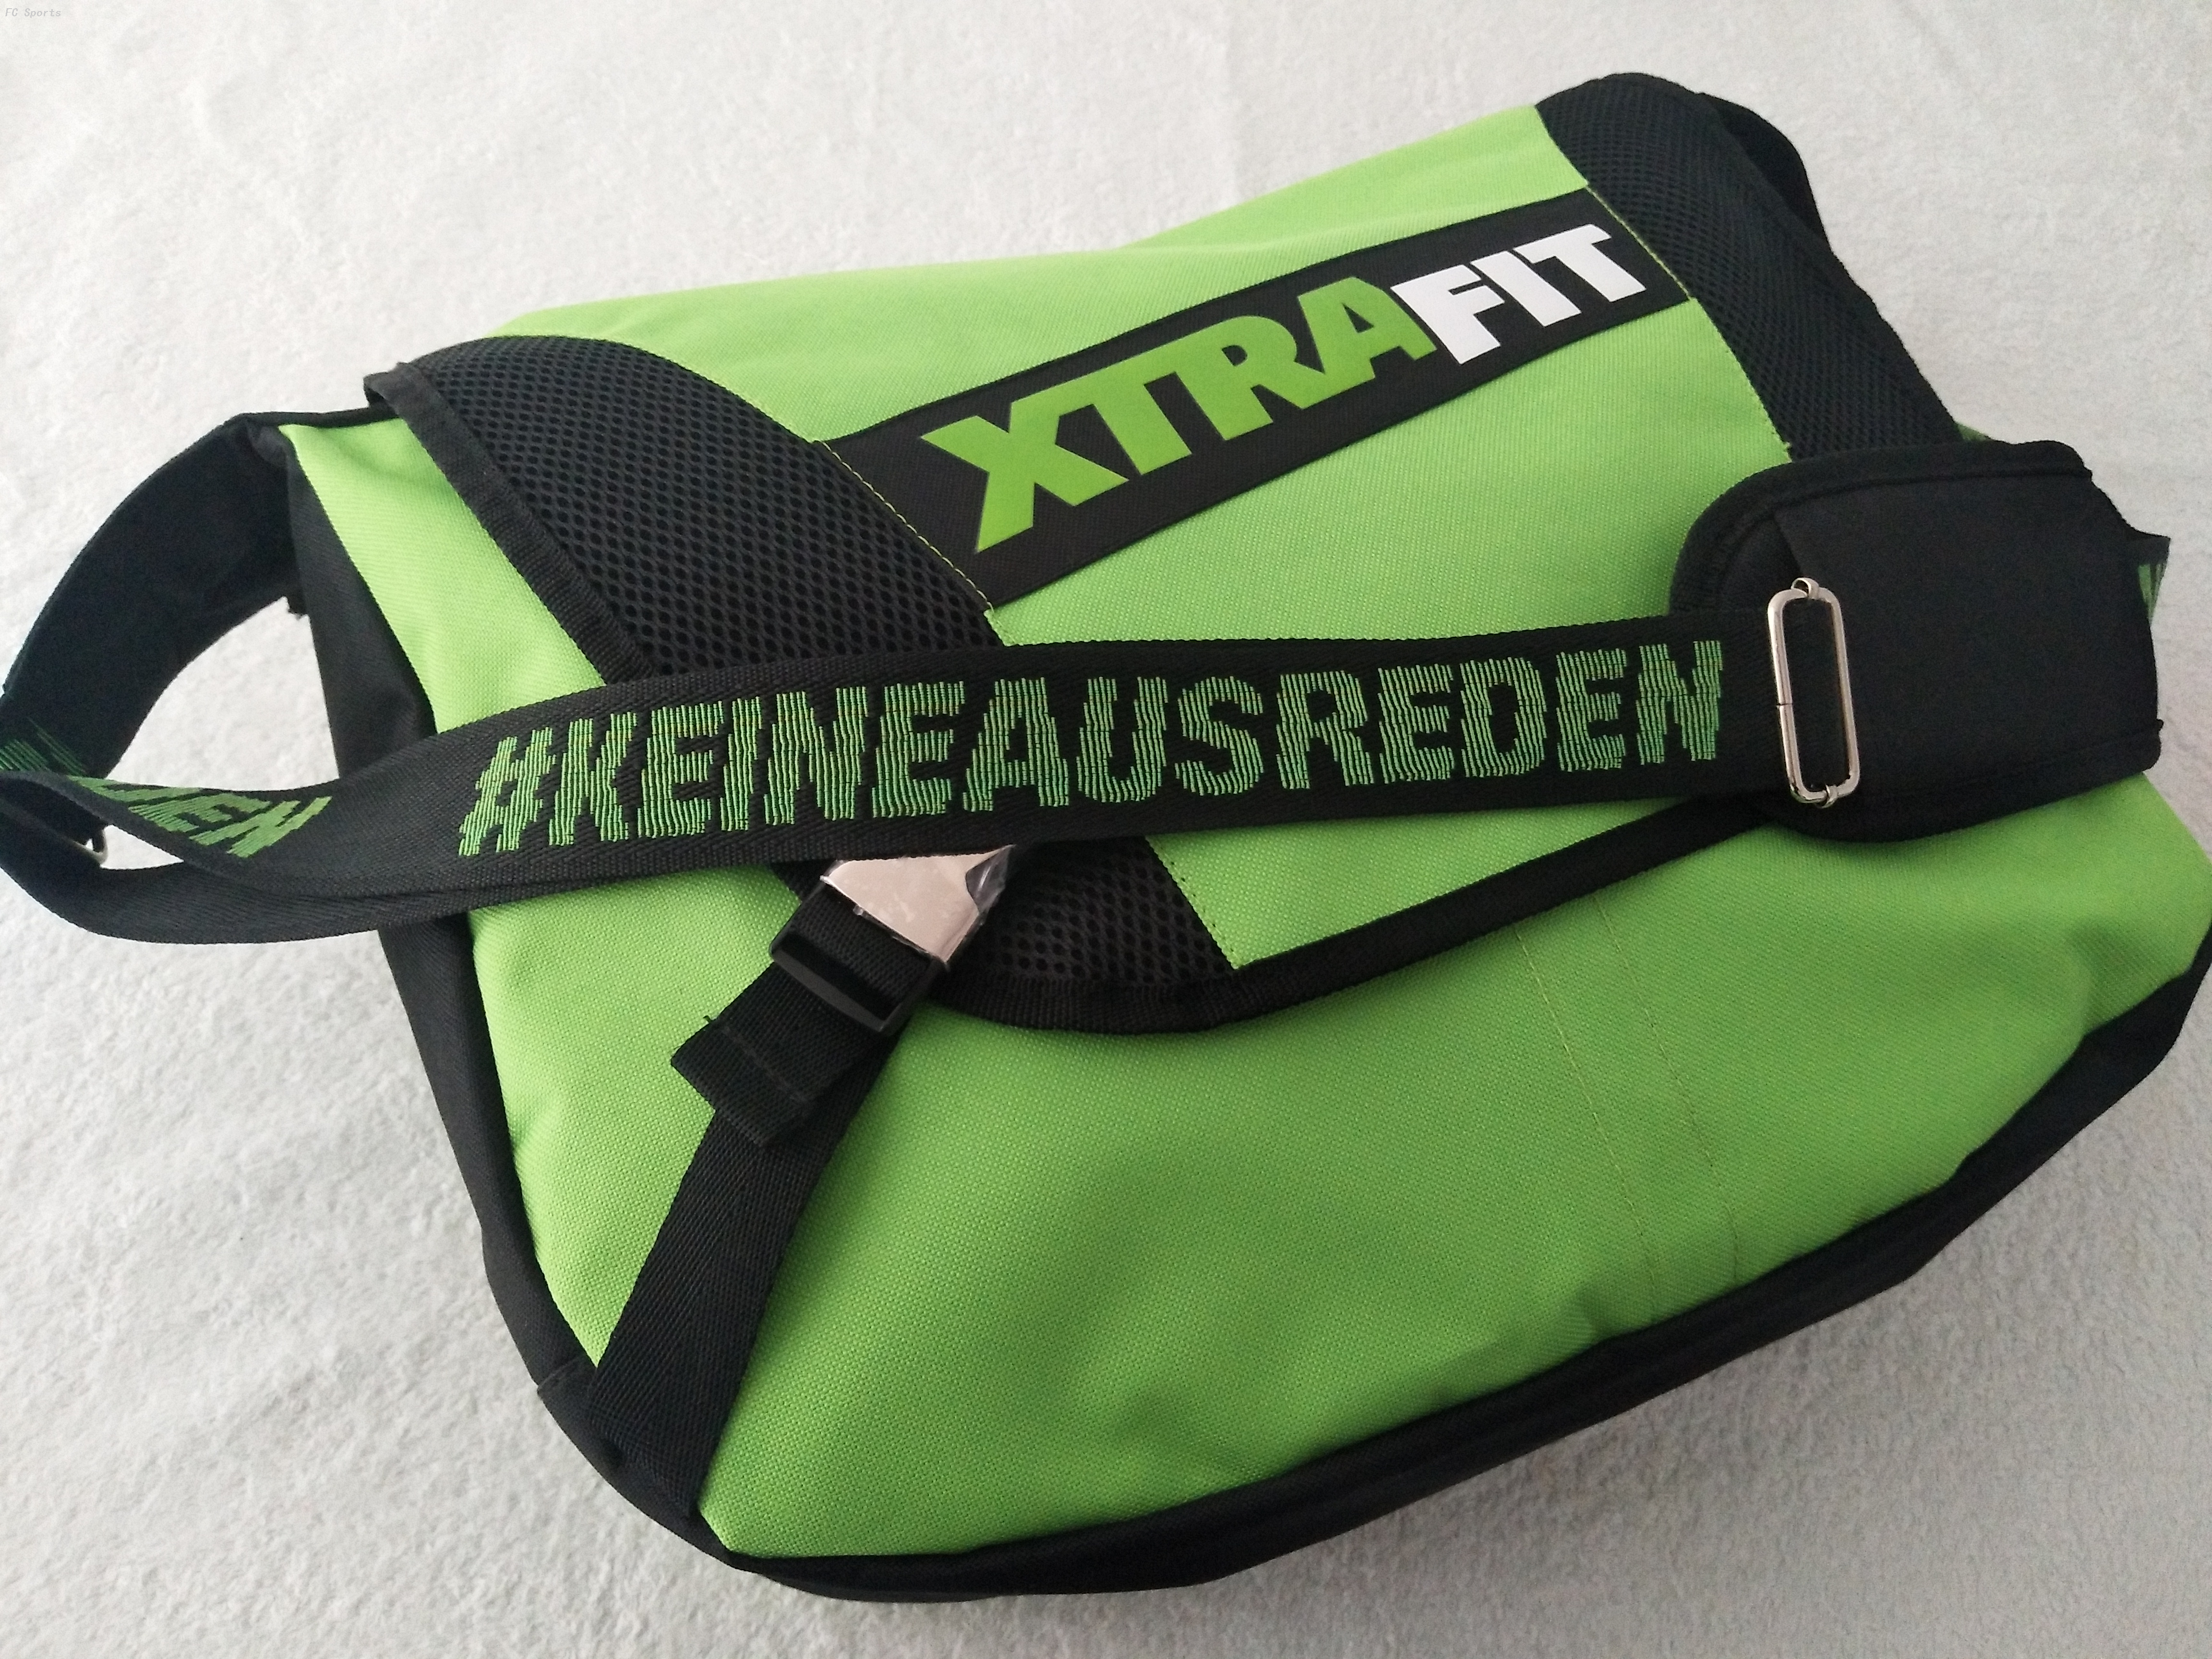 New Waterproof Gym Bag Fitness Training Sports Bag Portable Shoulder Travel Bag 